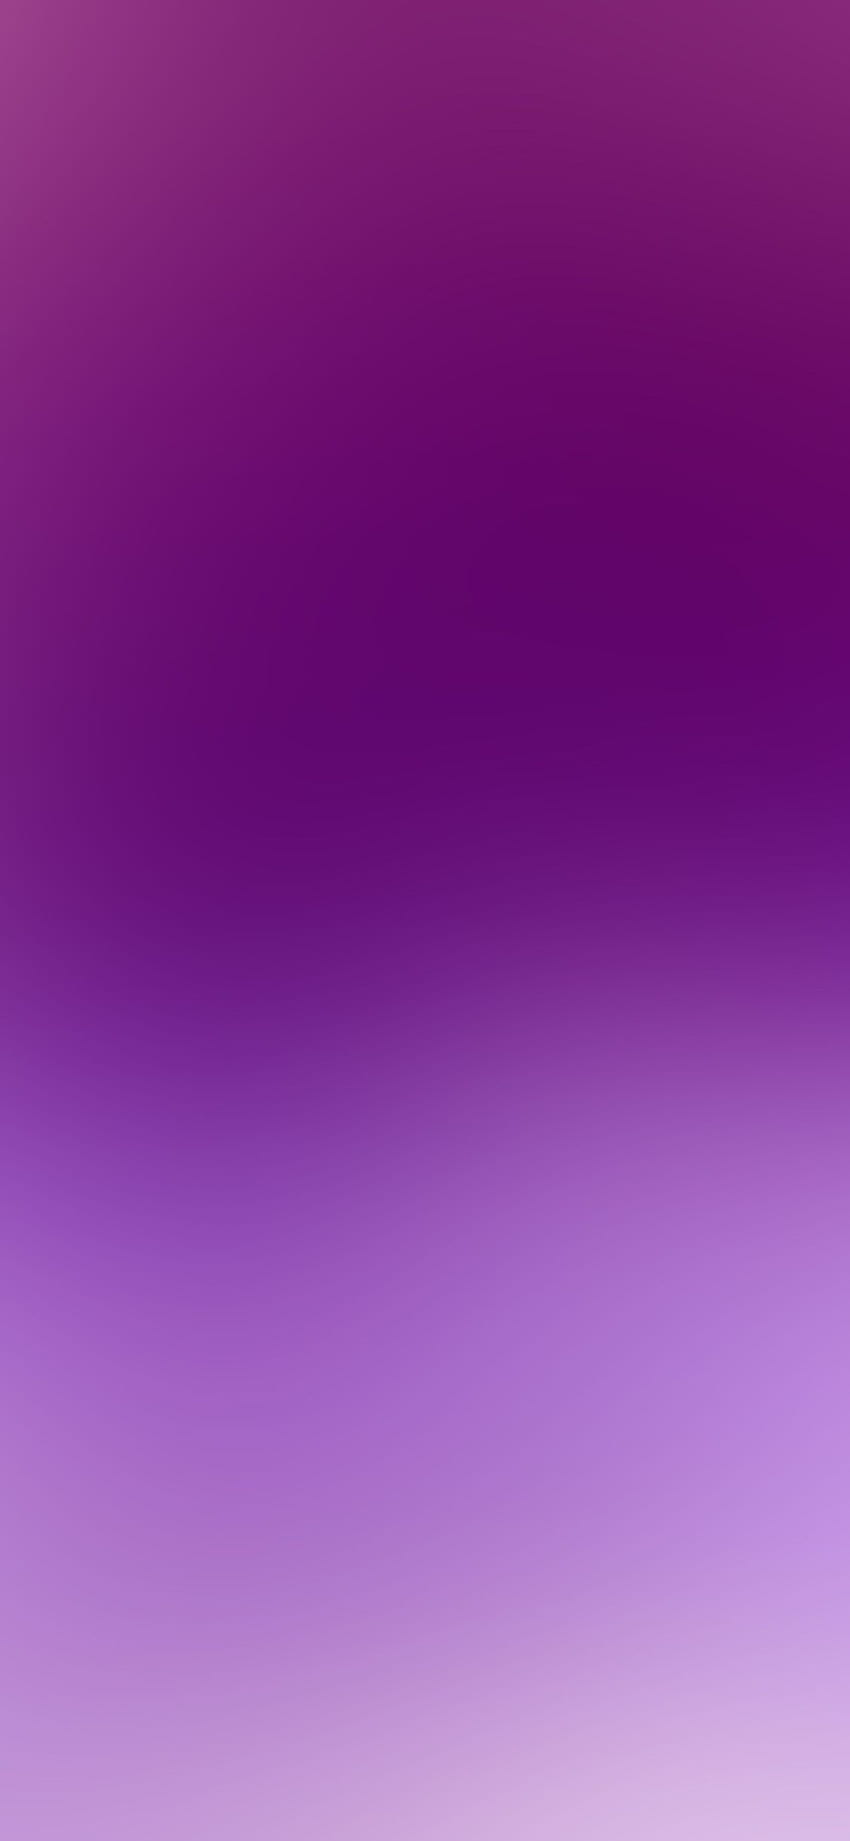 iPhonePapers - purple rain gradation blur HD phone wallpaper